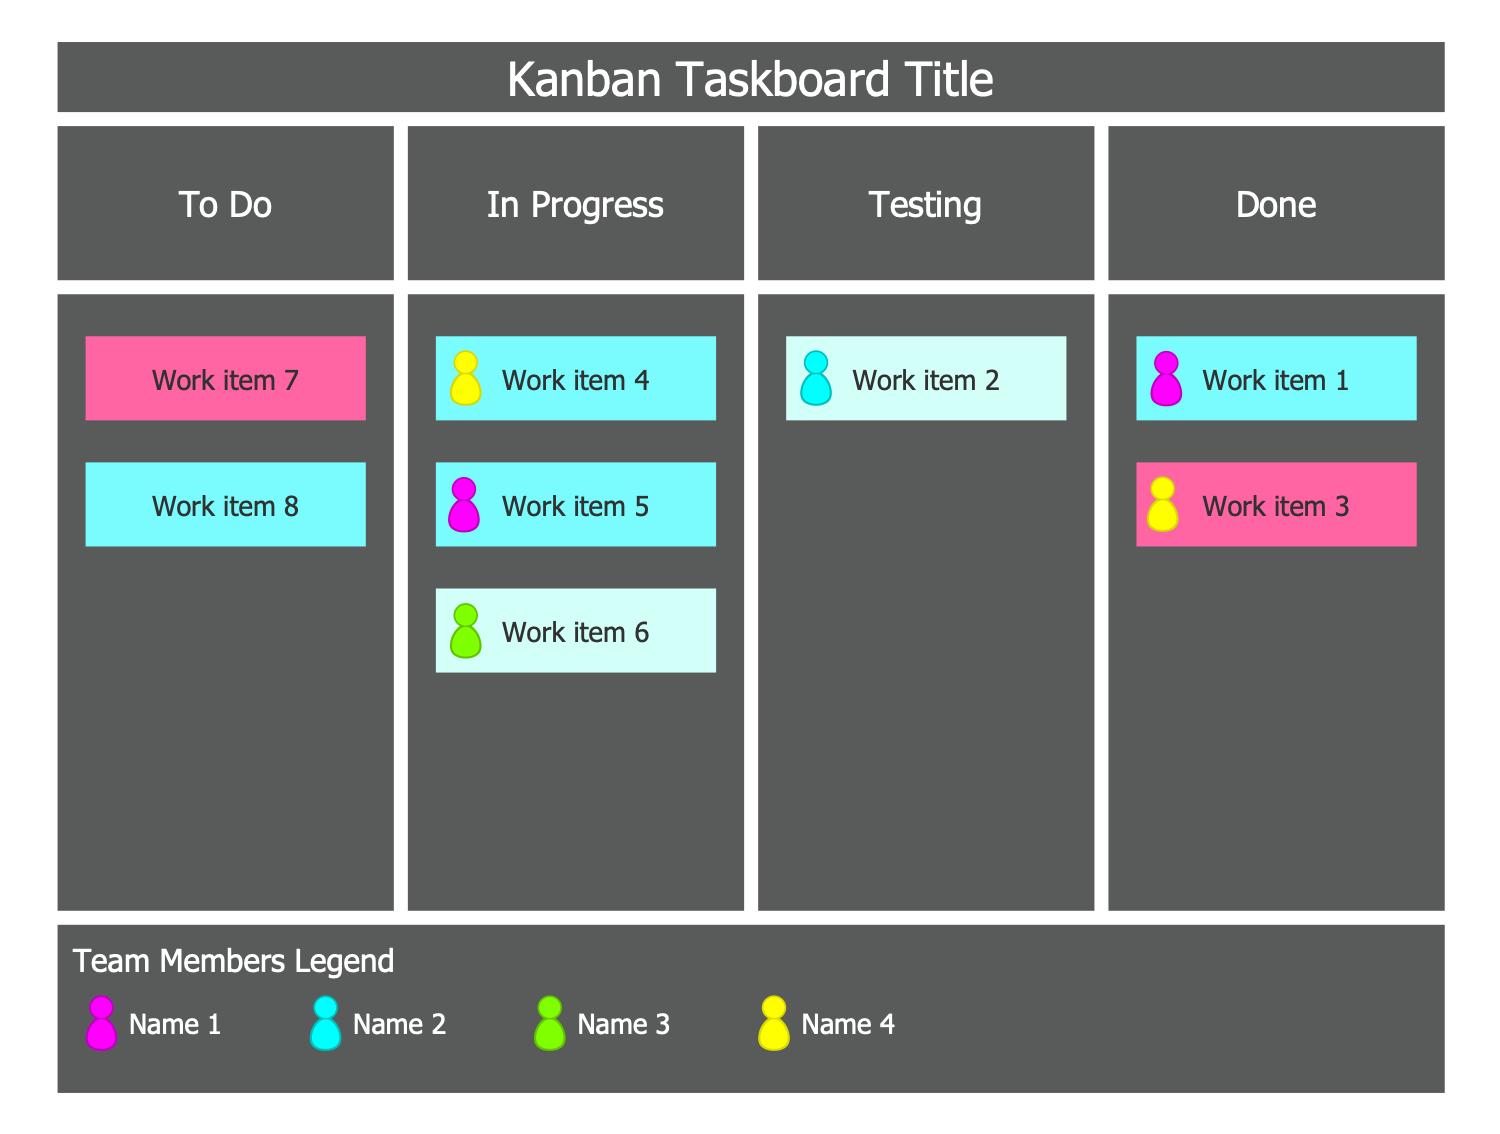 Kanban Taskboard Template